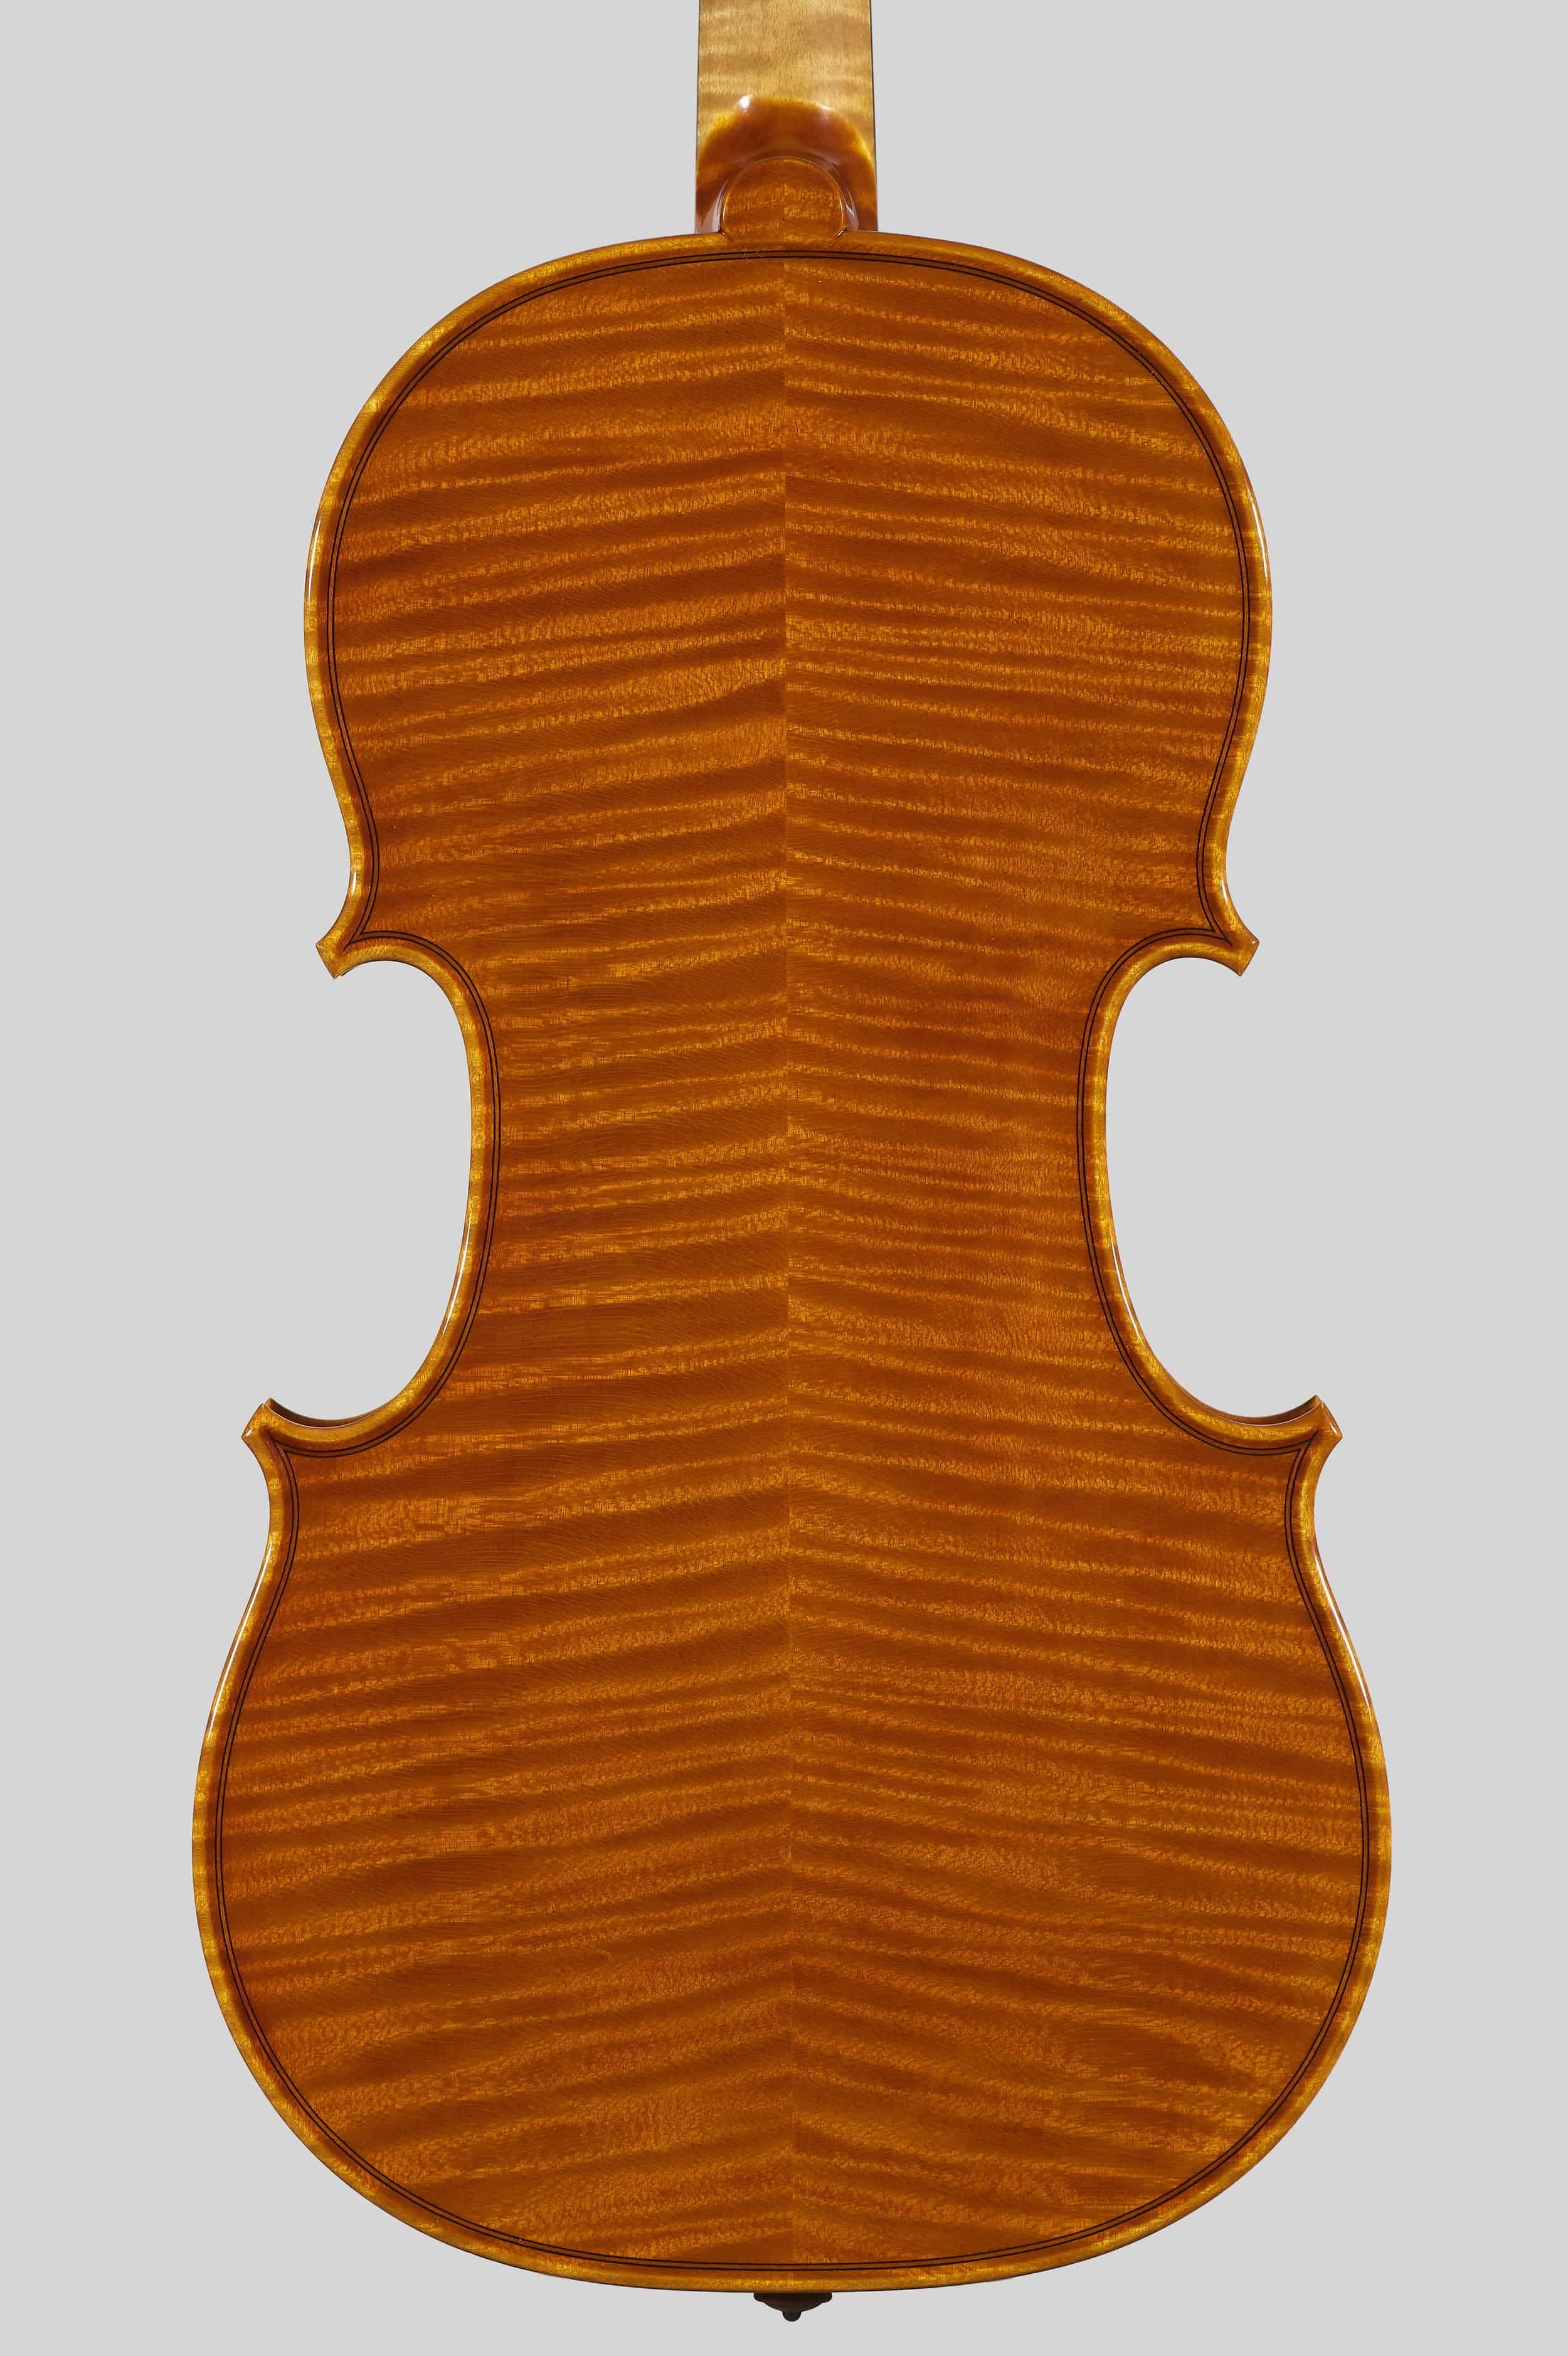 Anno 2017 - Violino modello stile A. Stradivari “Viotti” 1709 - Fondo